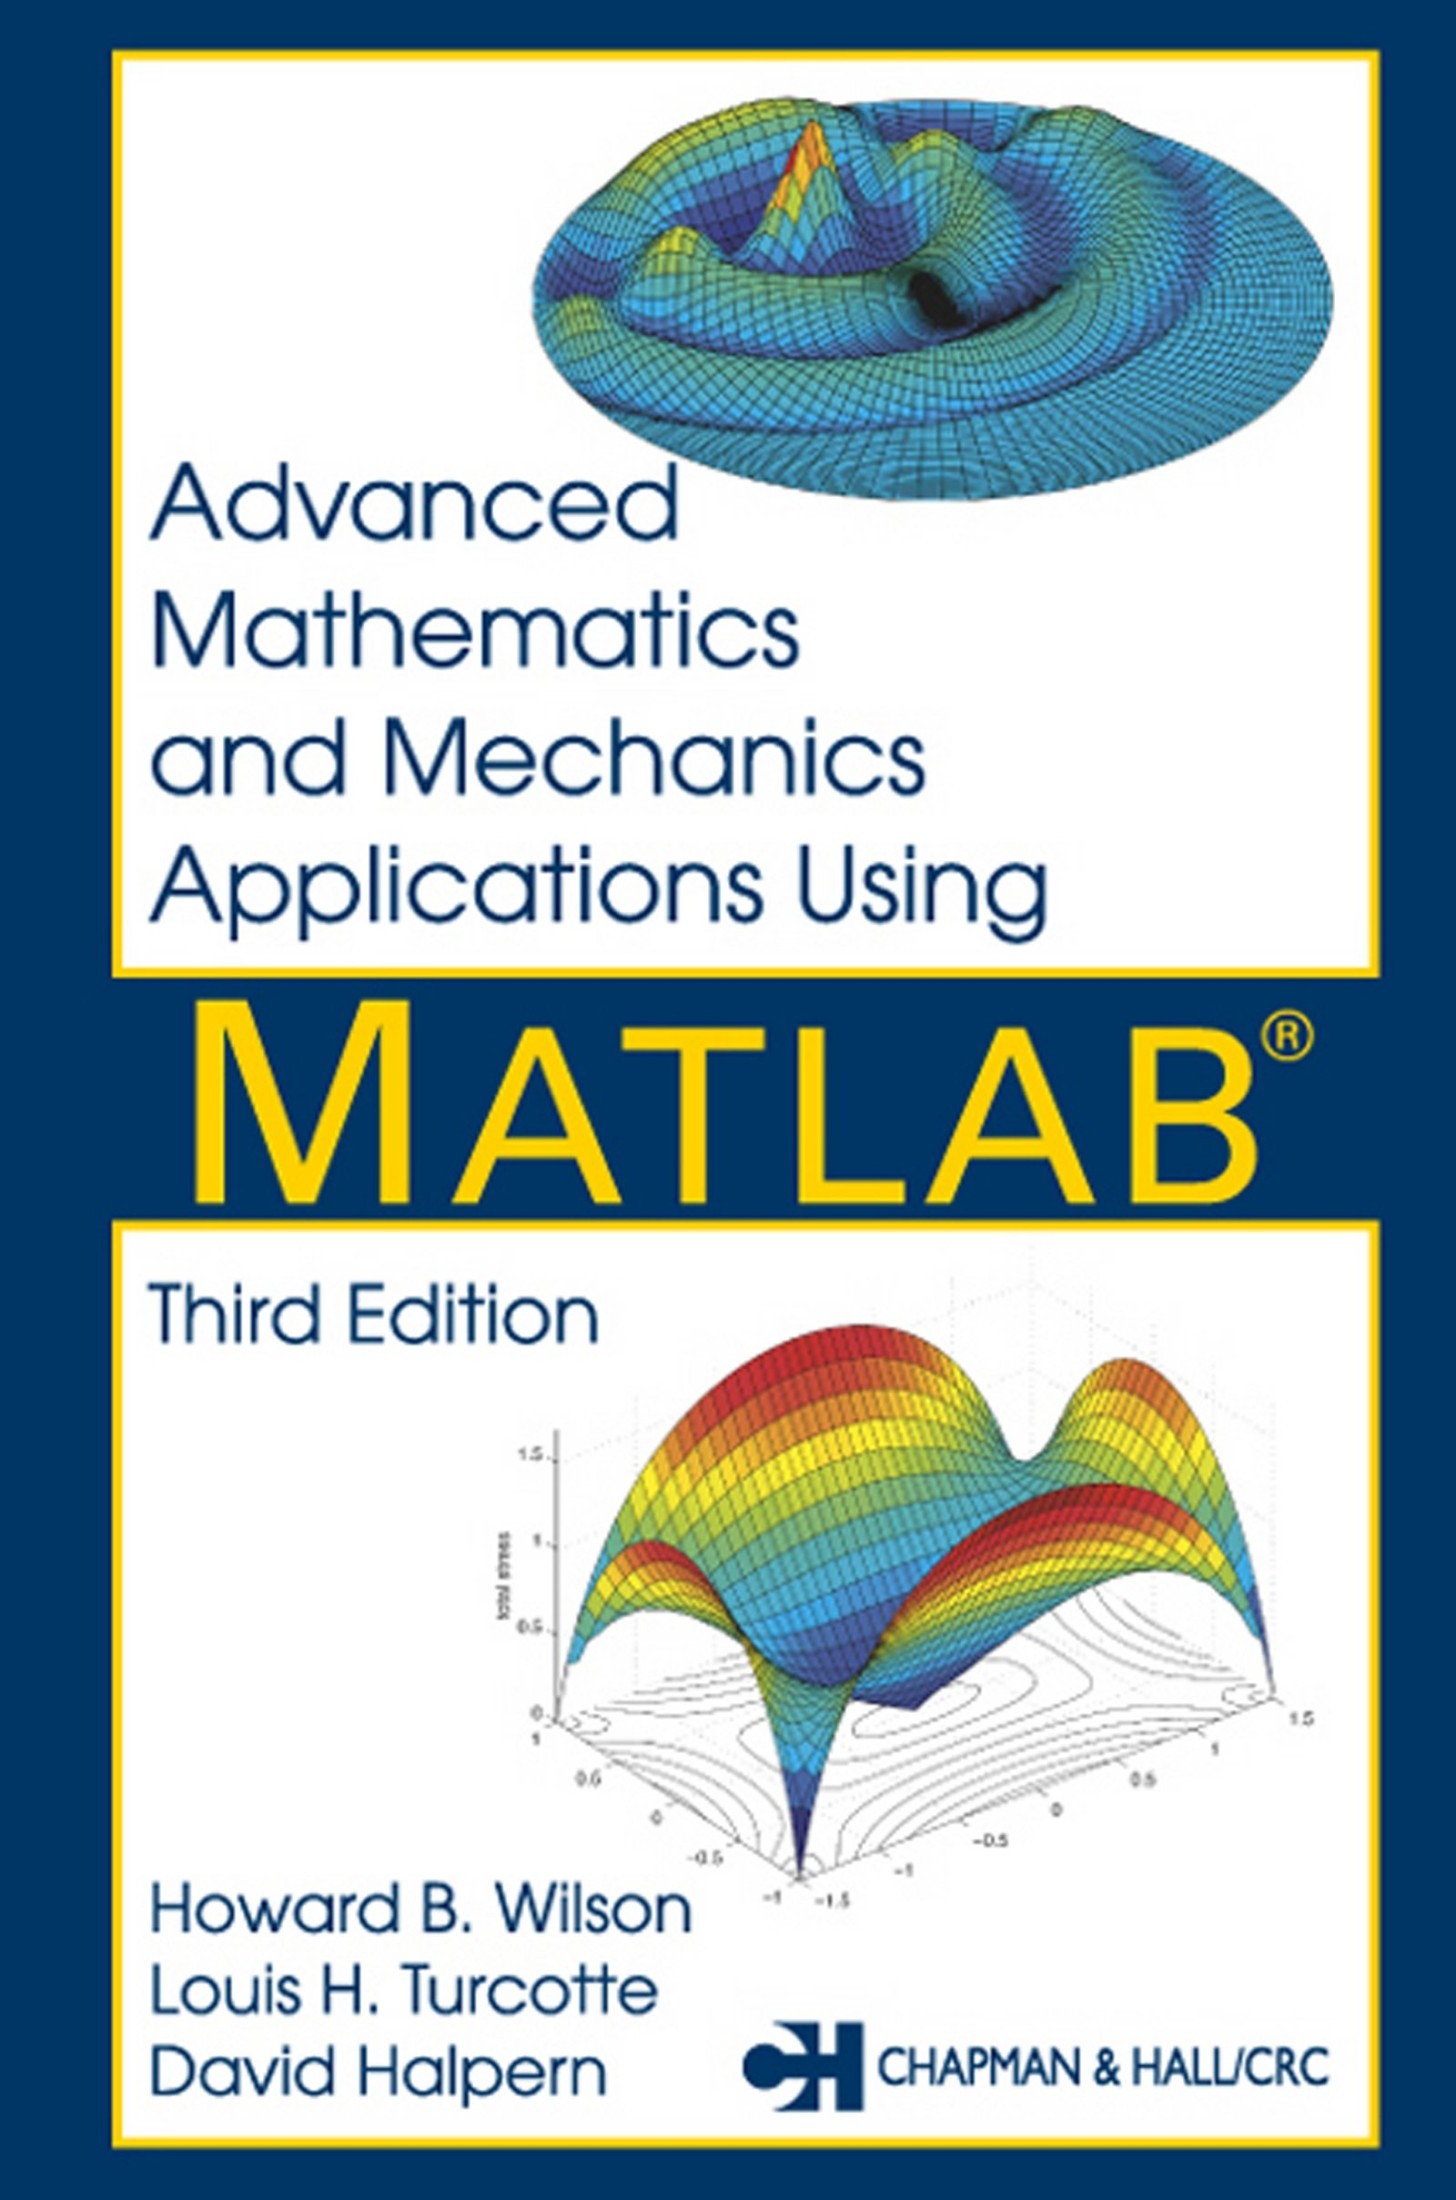 Advanced Mathematics and Mechanics Applications using MATLAB, Third Edition